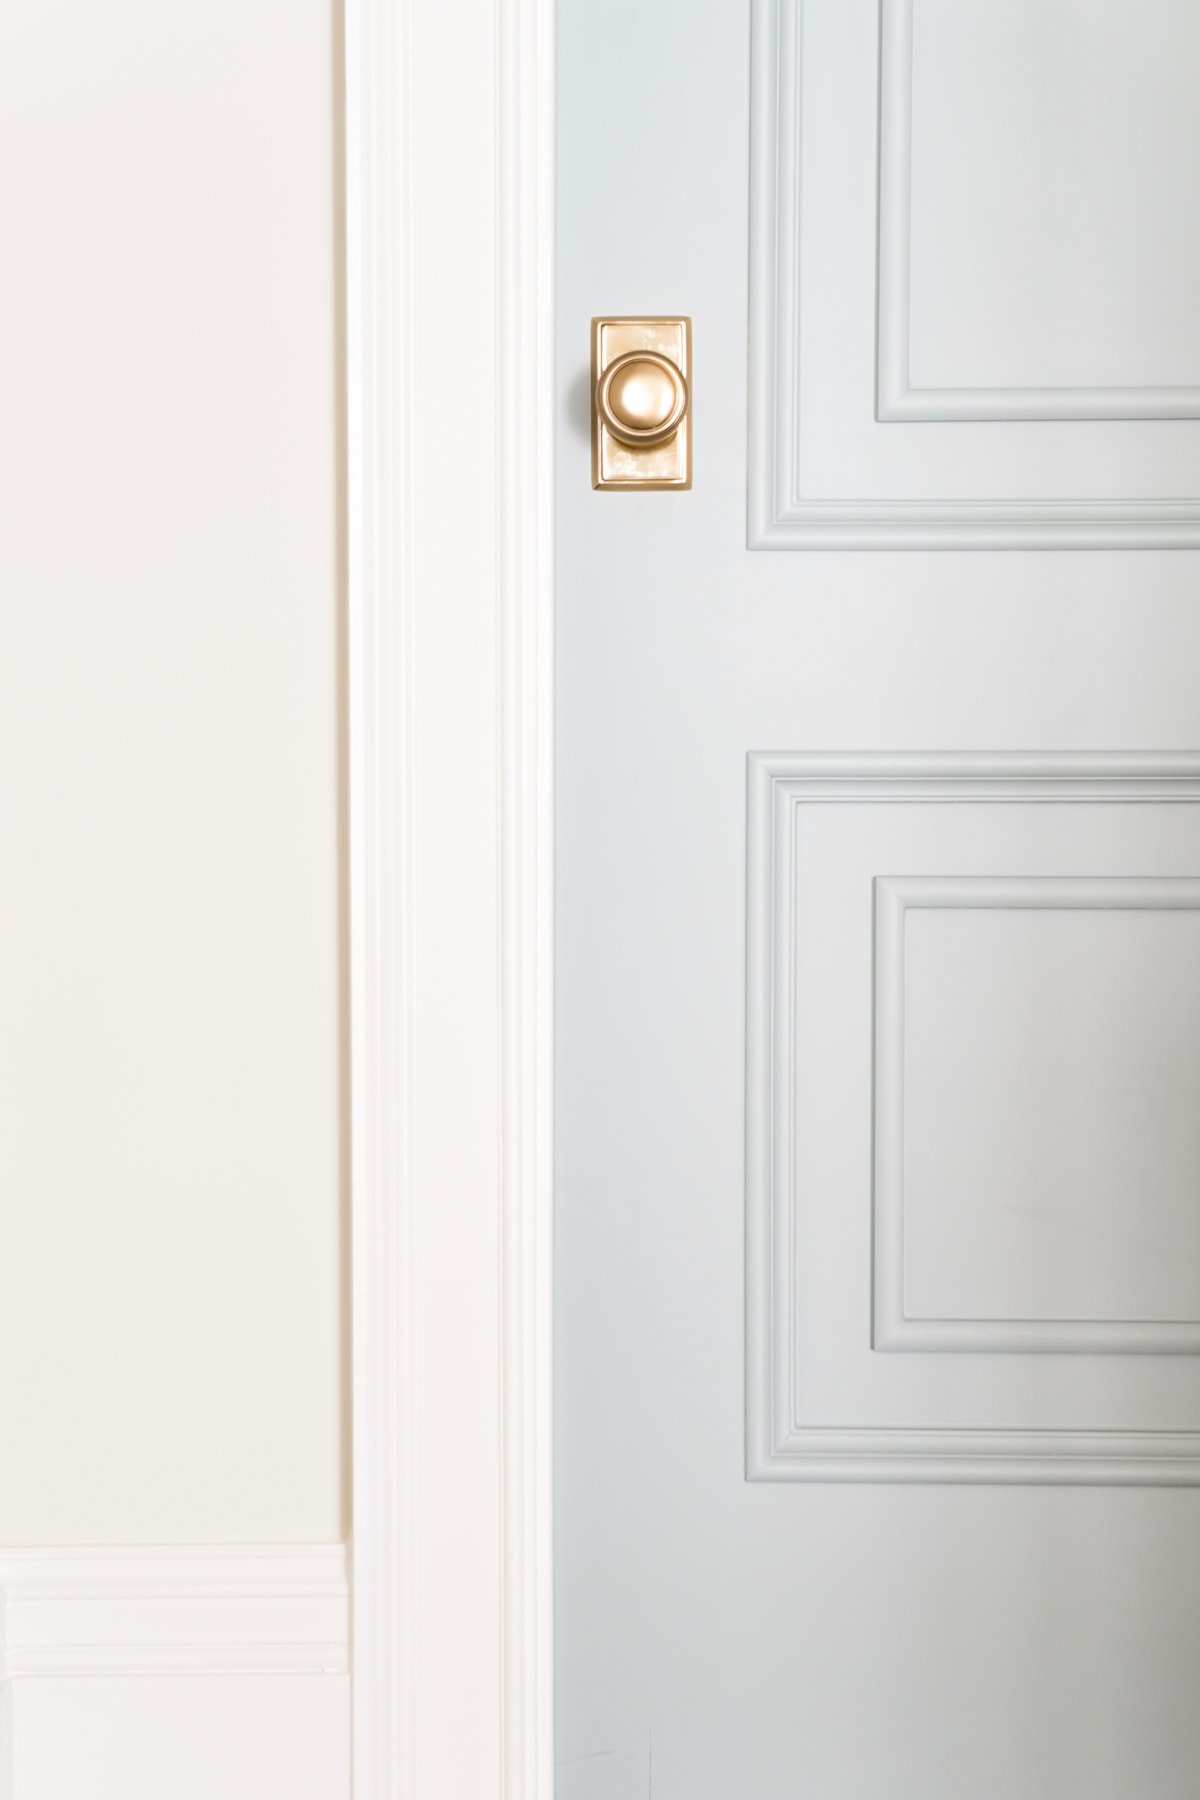 Boothbay Gray door with brass hardware